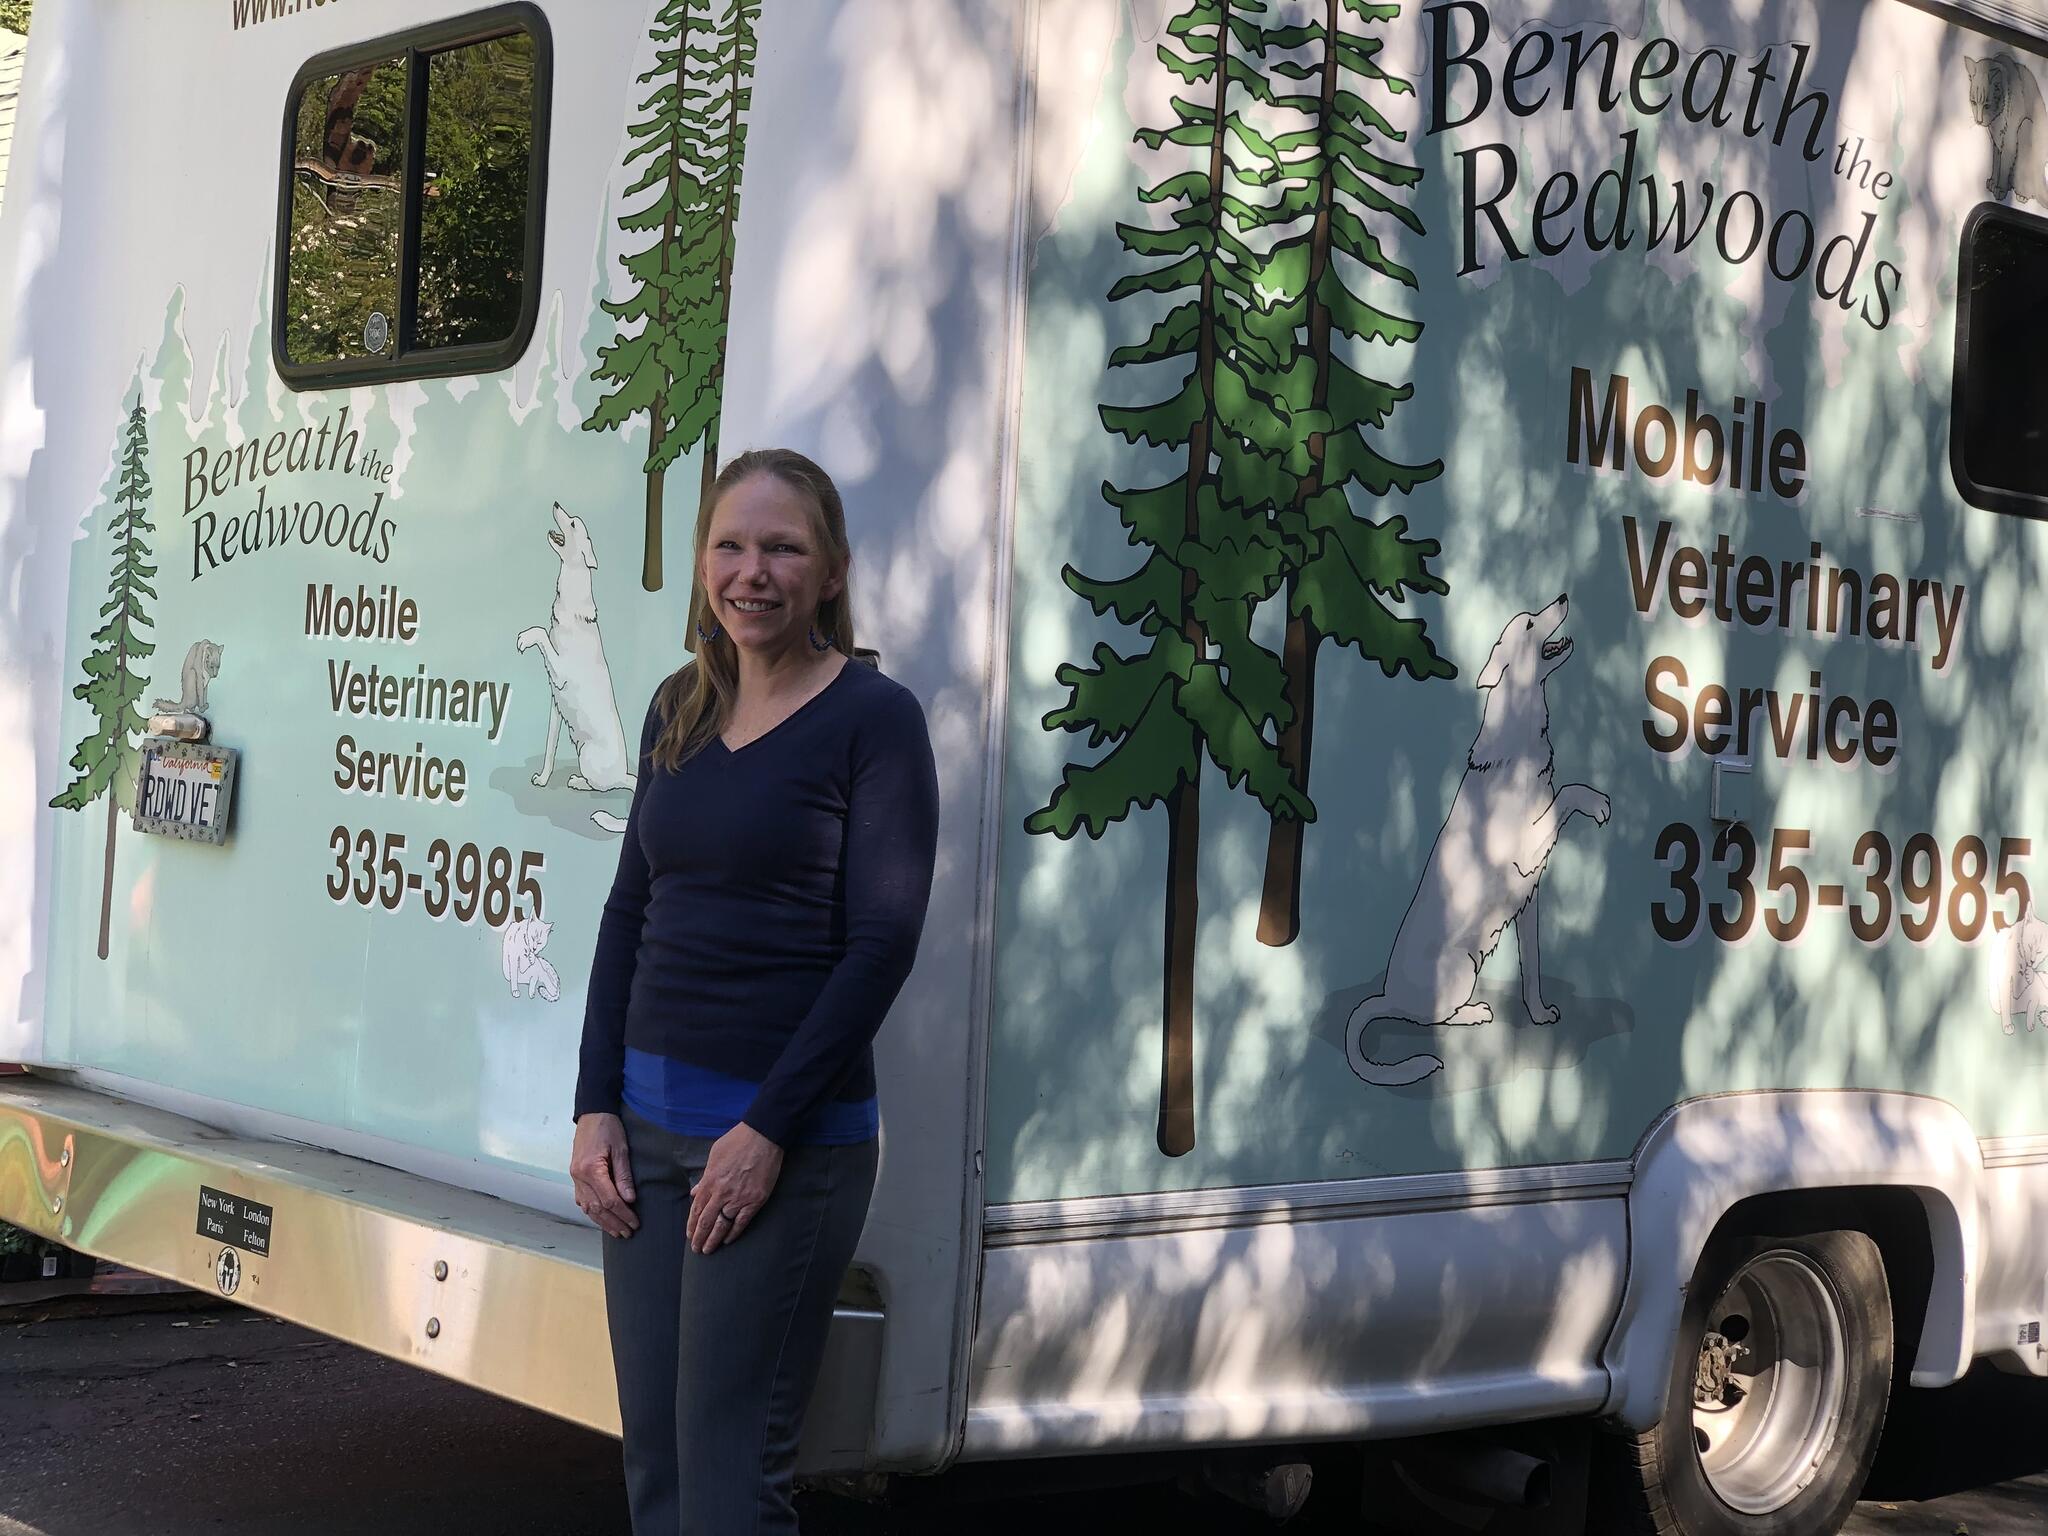 Beneath the Redwoods Mobile Vet 11730 Lakeshore Drive, Felton California 95018